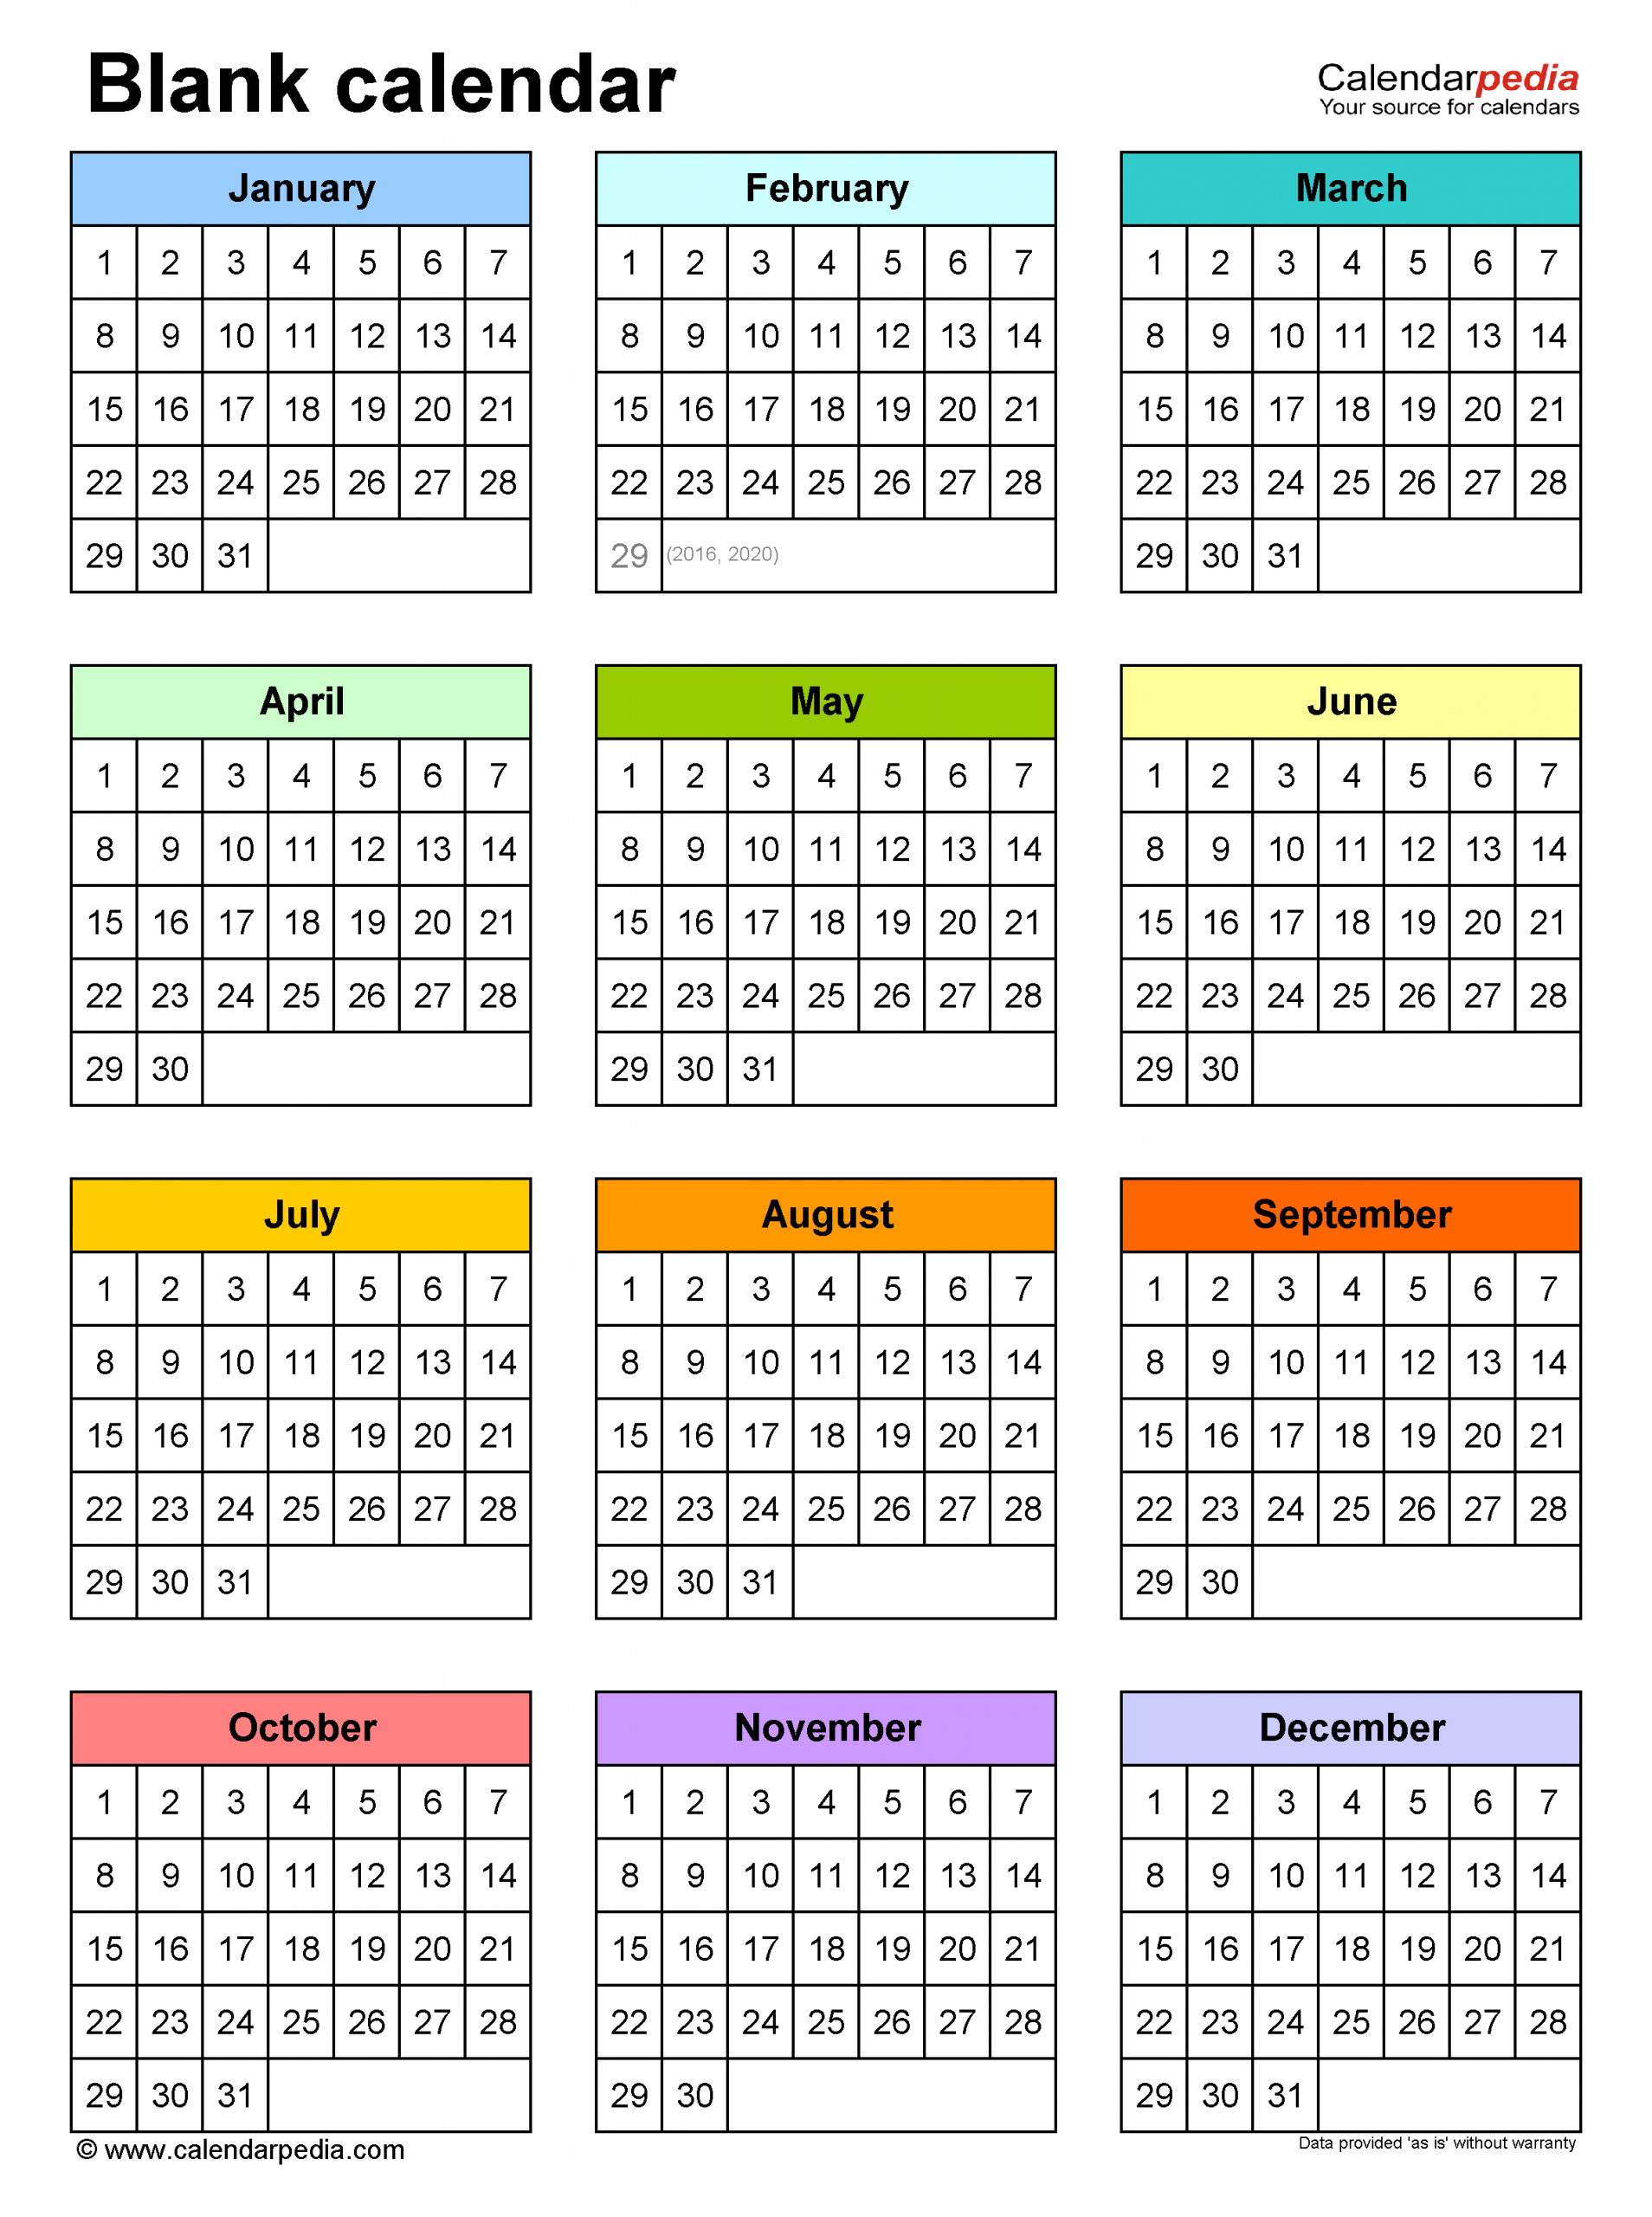 Blank Calendars - Free Printable Microsoft Word Templates 6 Months Calendar Word